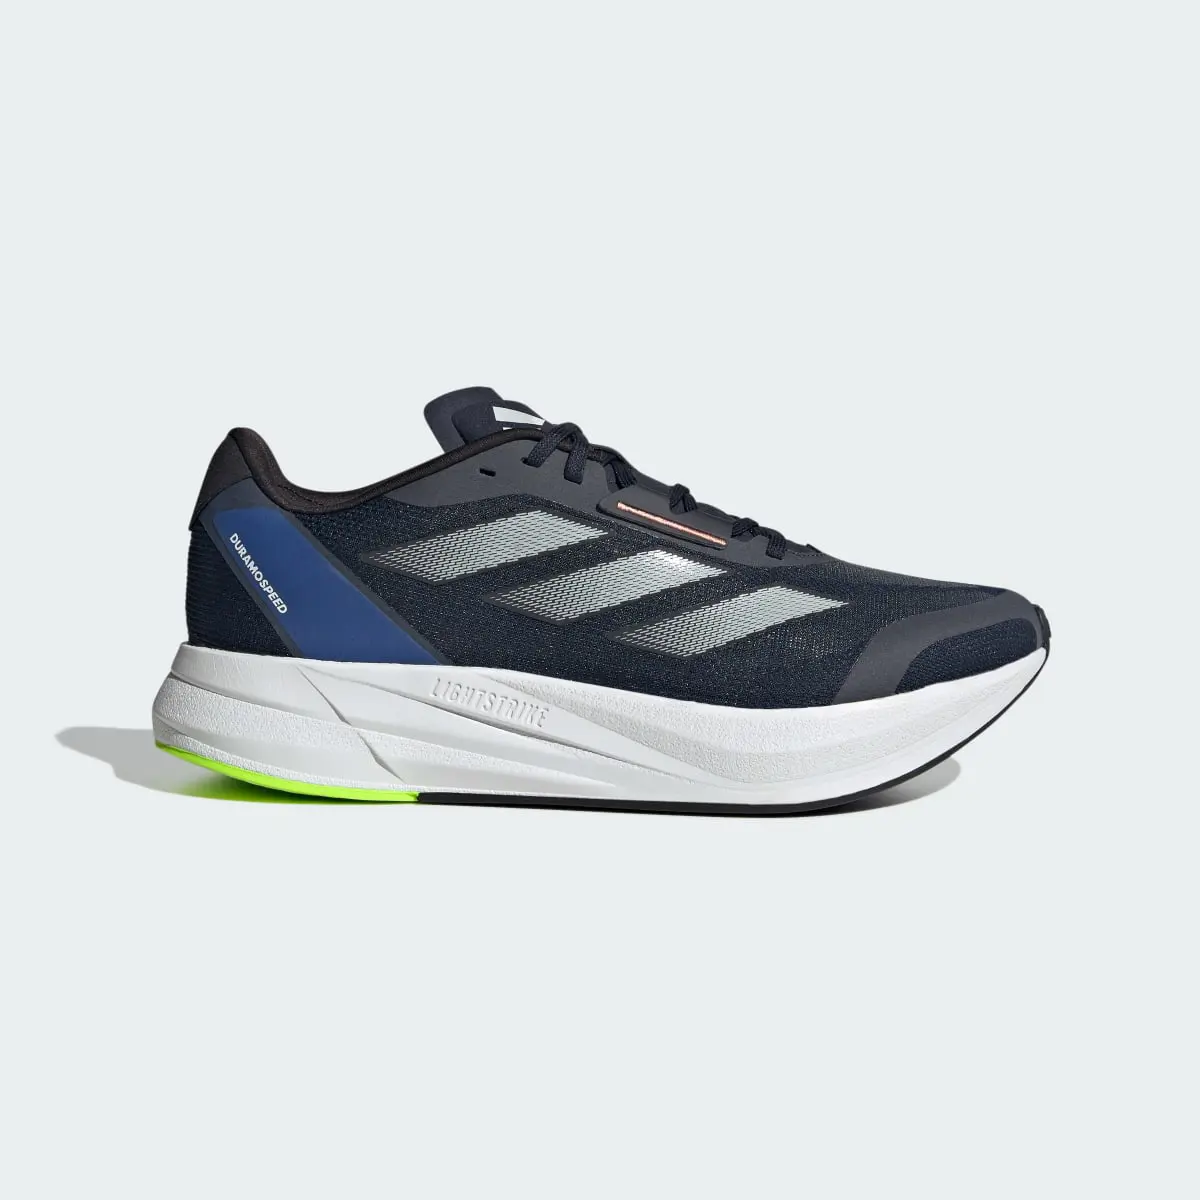 Adidas Duramo Speed Ayakkabı. 2